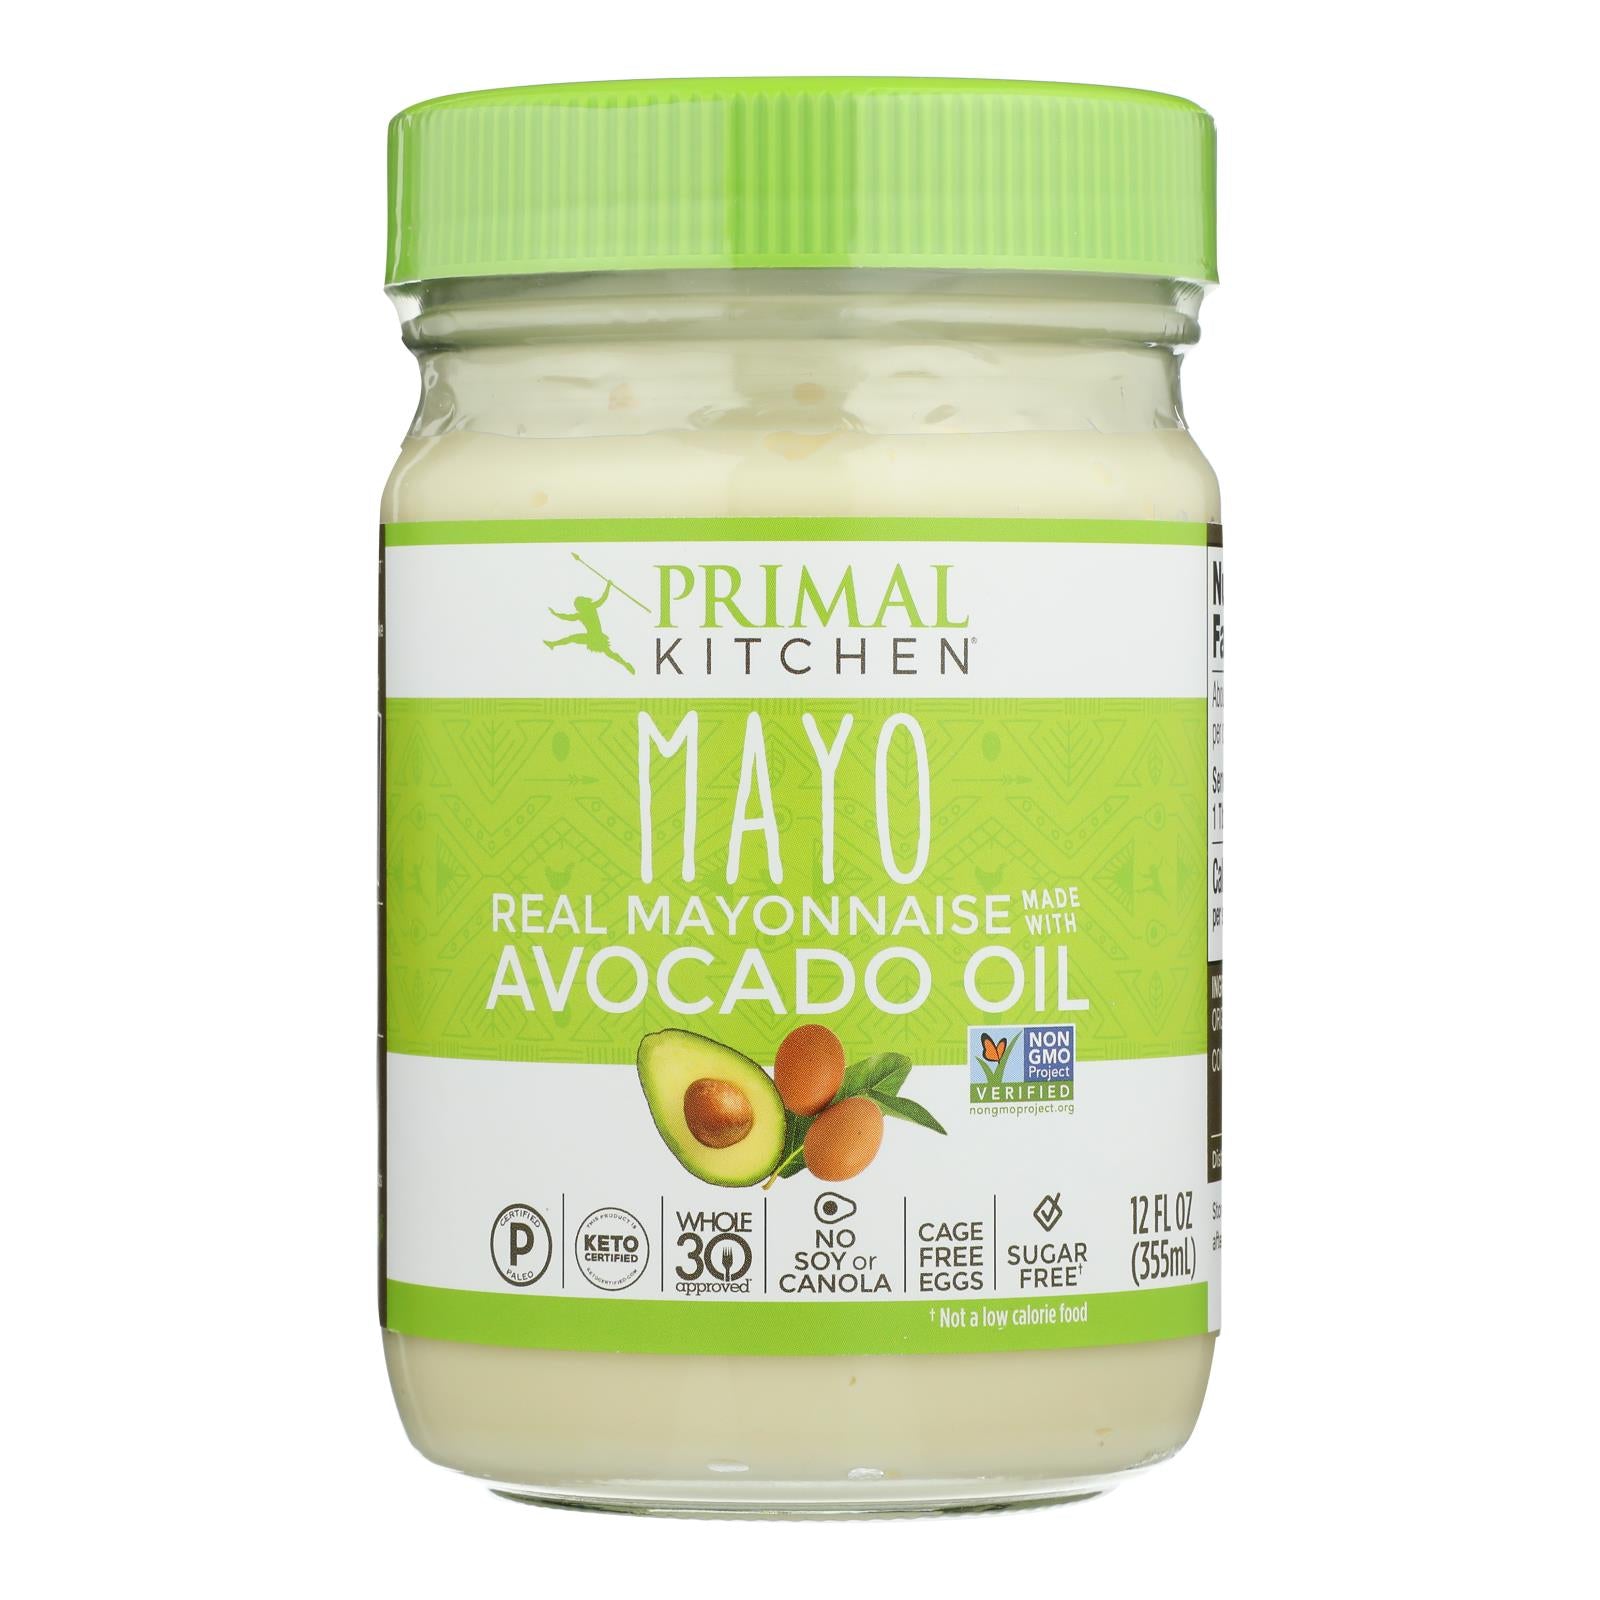 Primal Kitchen Chipotle Lime Mayo Avocado Oil Real Mayonnaise, 12 fl oz 